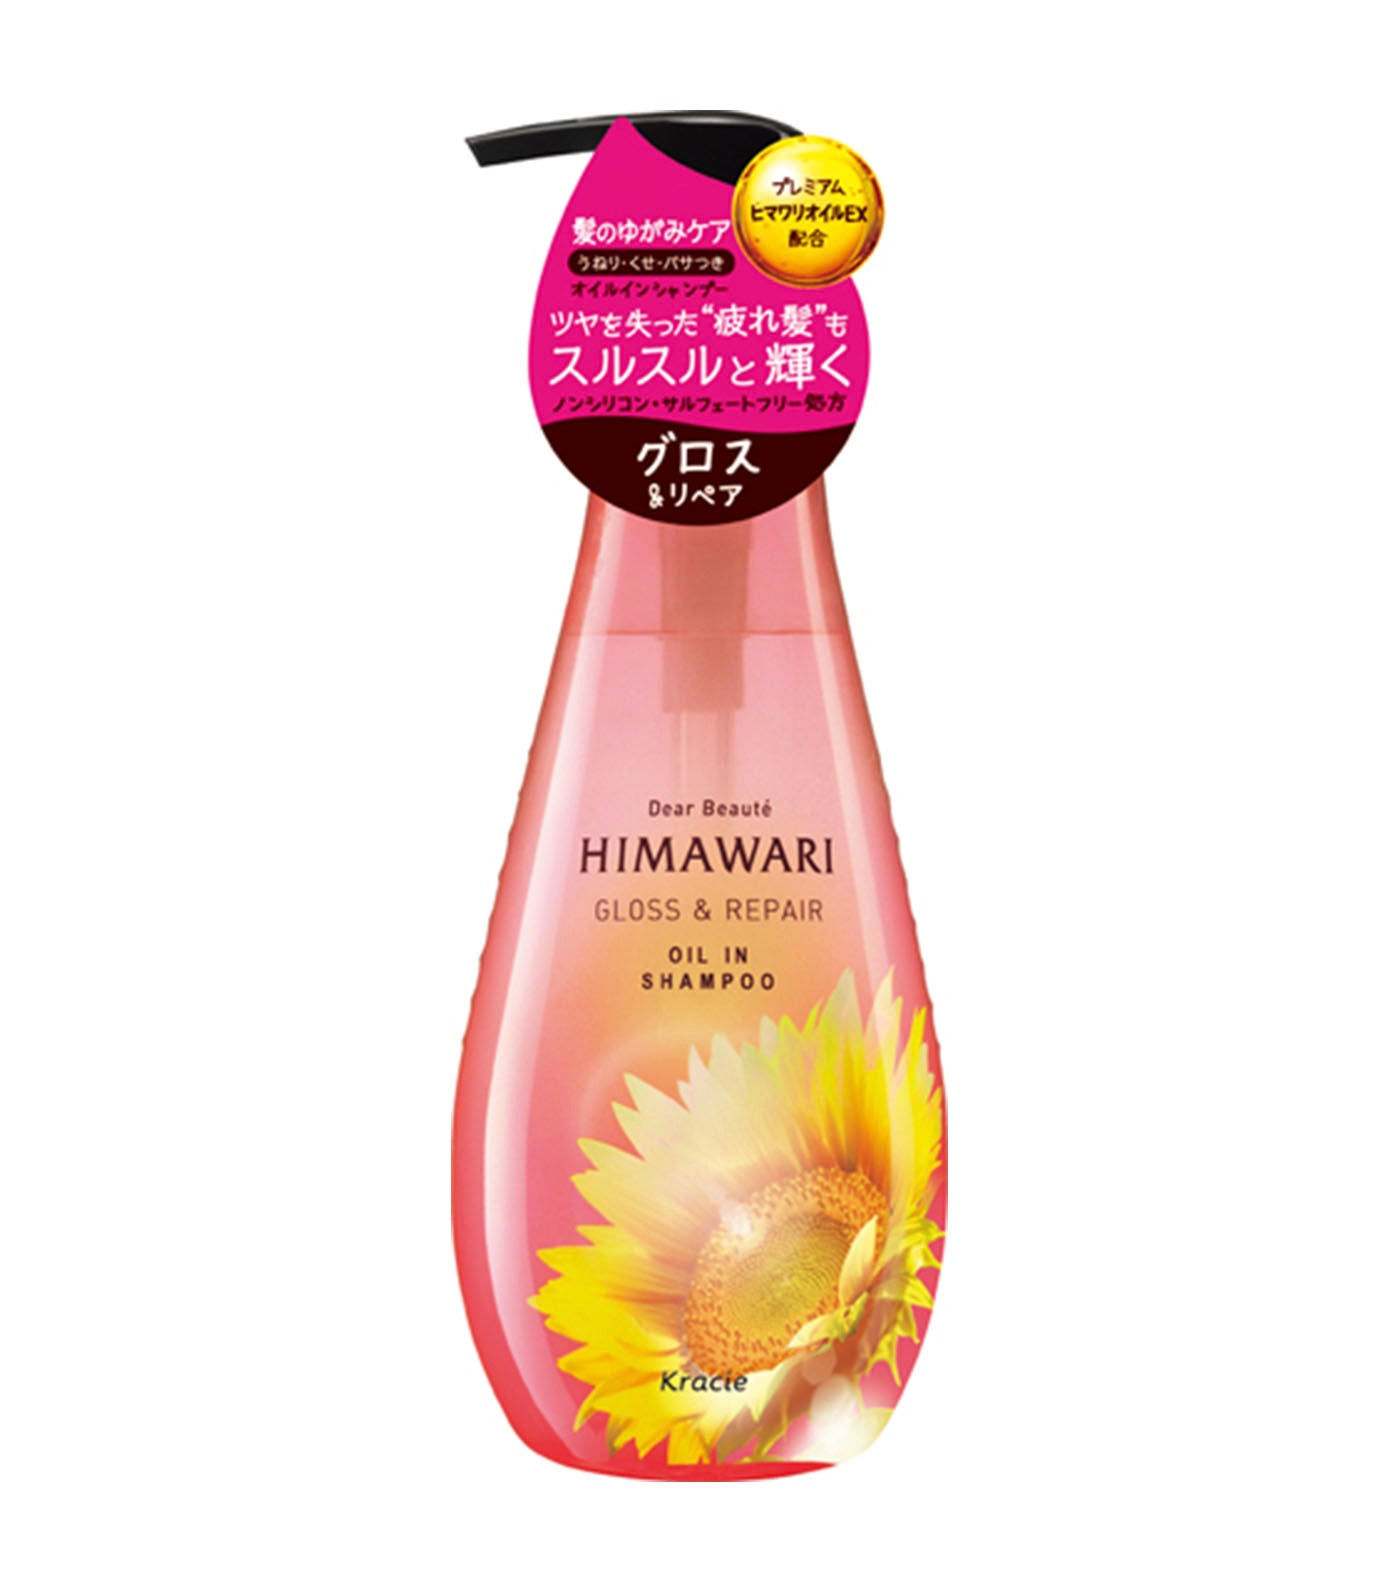 Himawari dear beaute himawari gloss and repair oil in shampoo